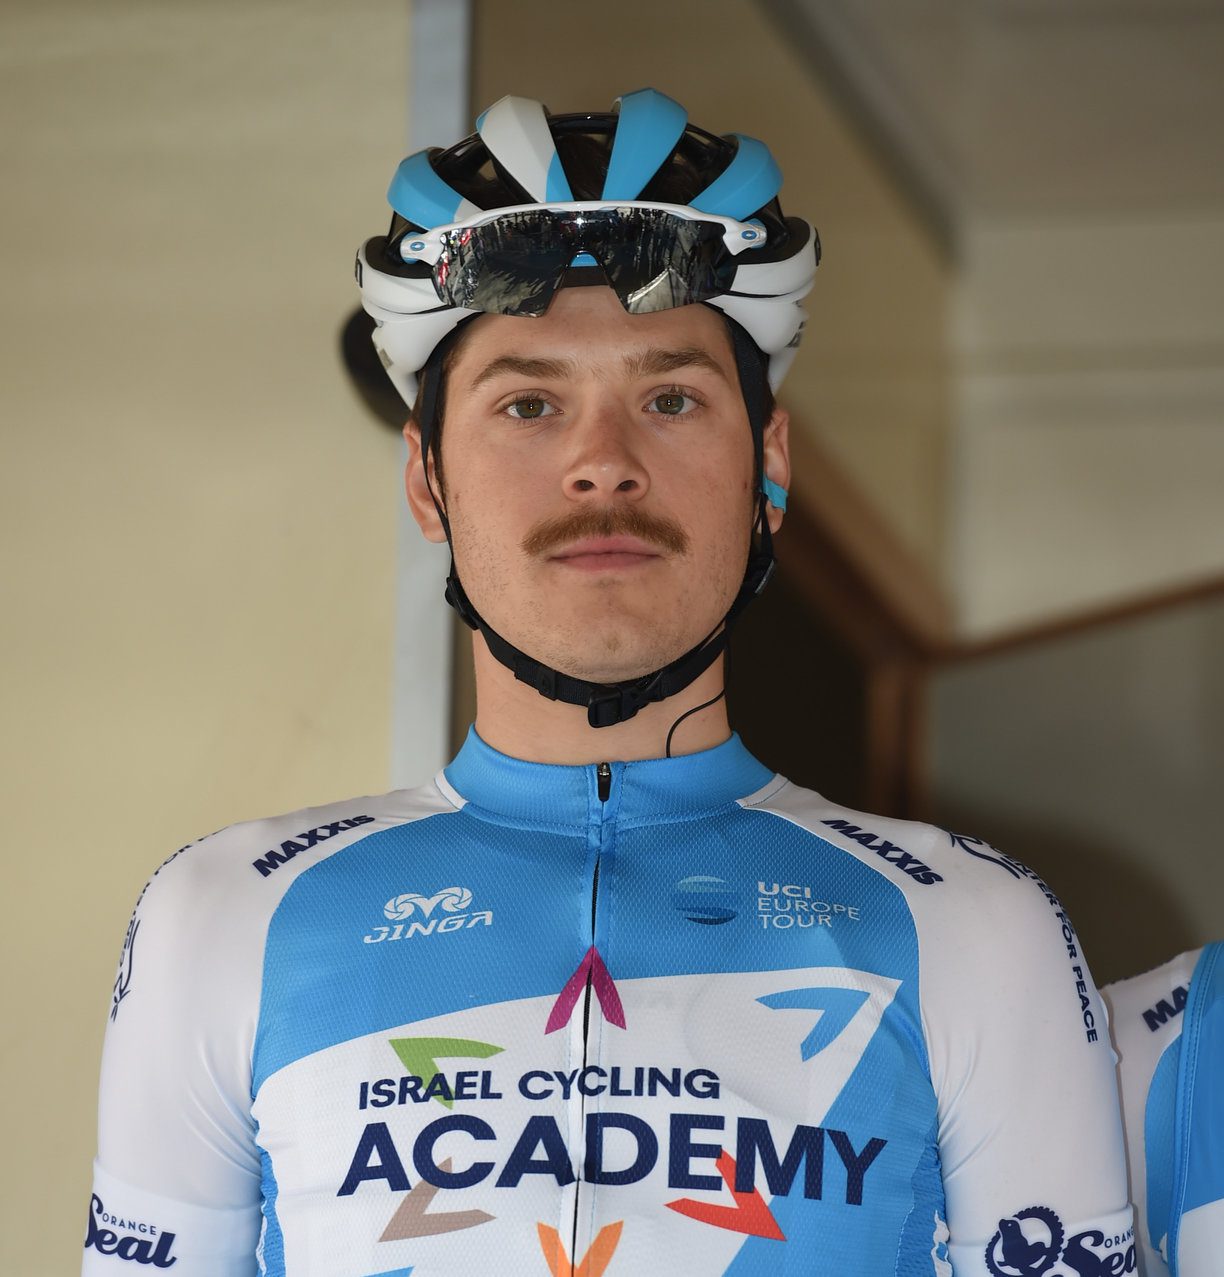 03-02-2019 Gp Ouverture La Marseillaise; 2019, Israel Cycling Academy ...